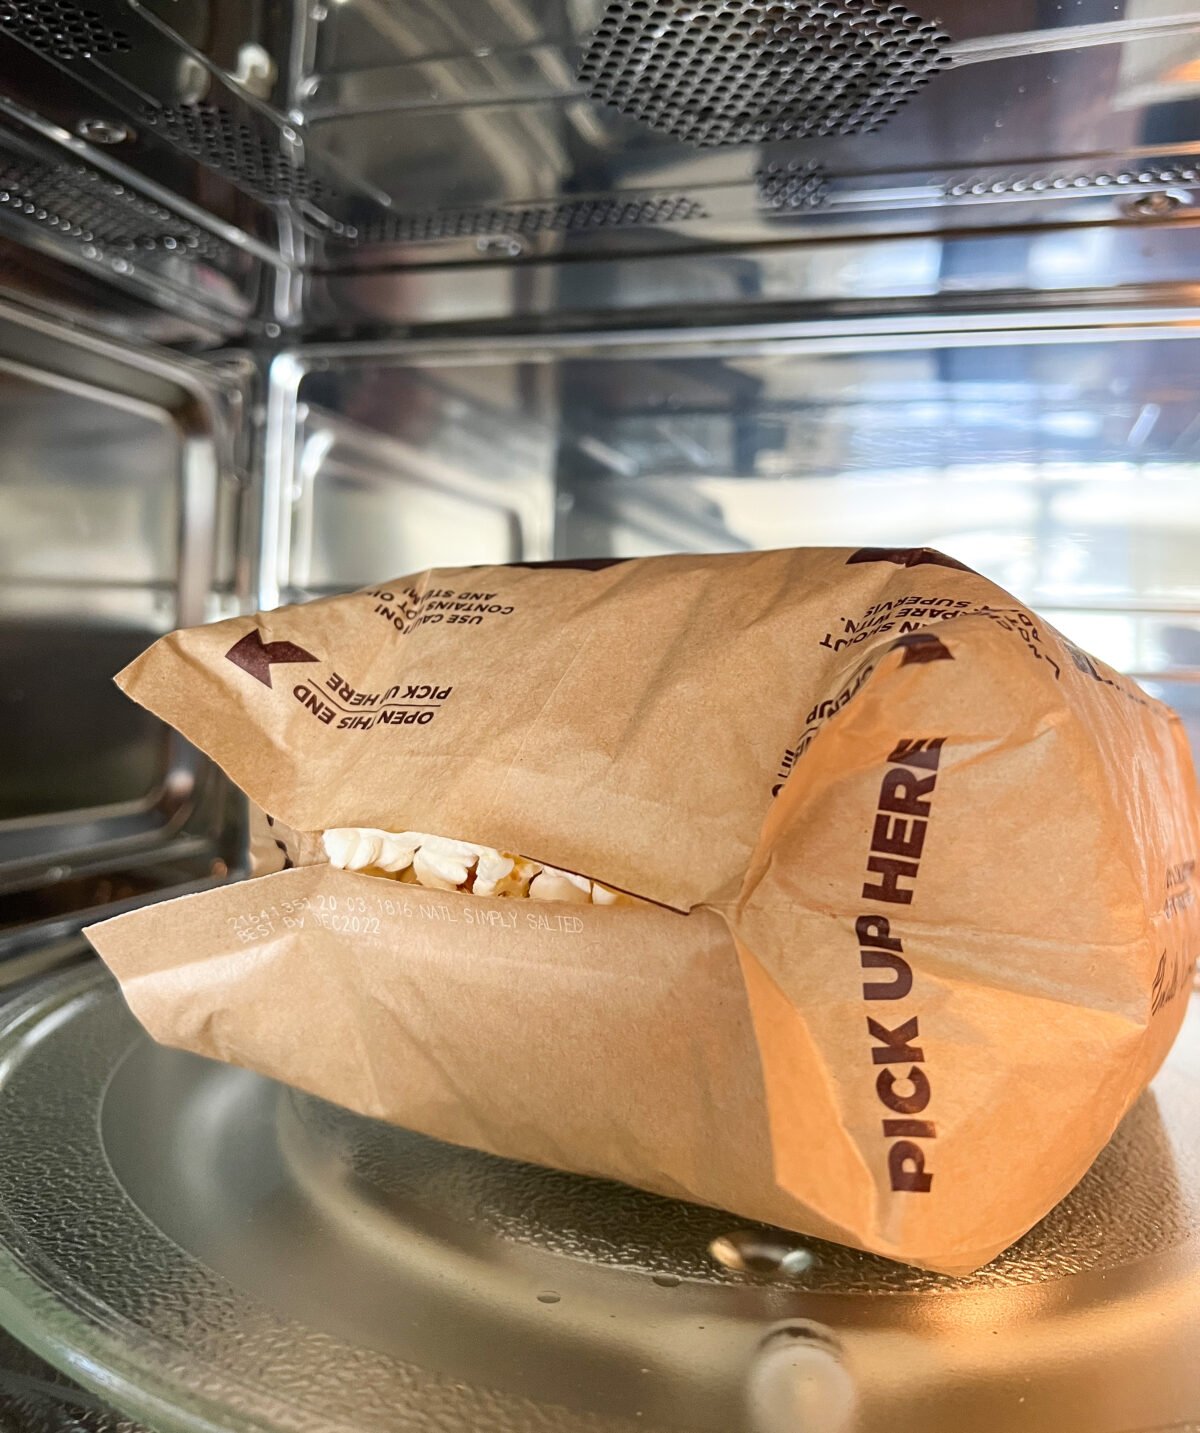 bag of popped popcorn in microwave